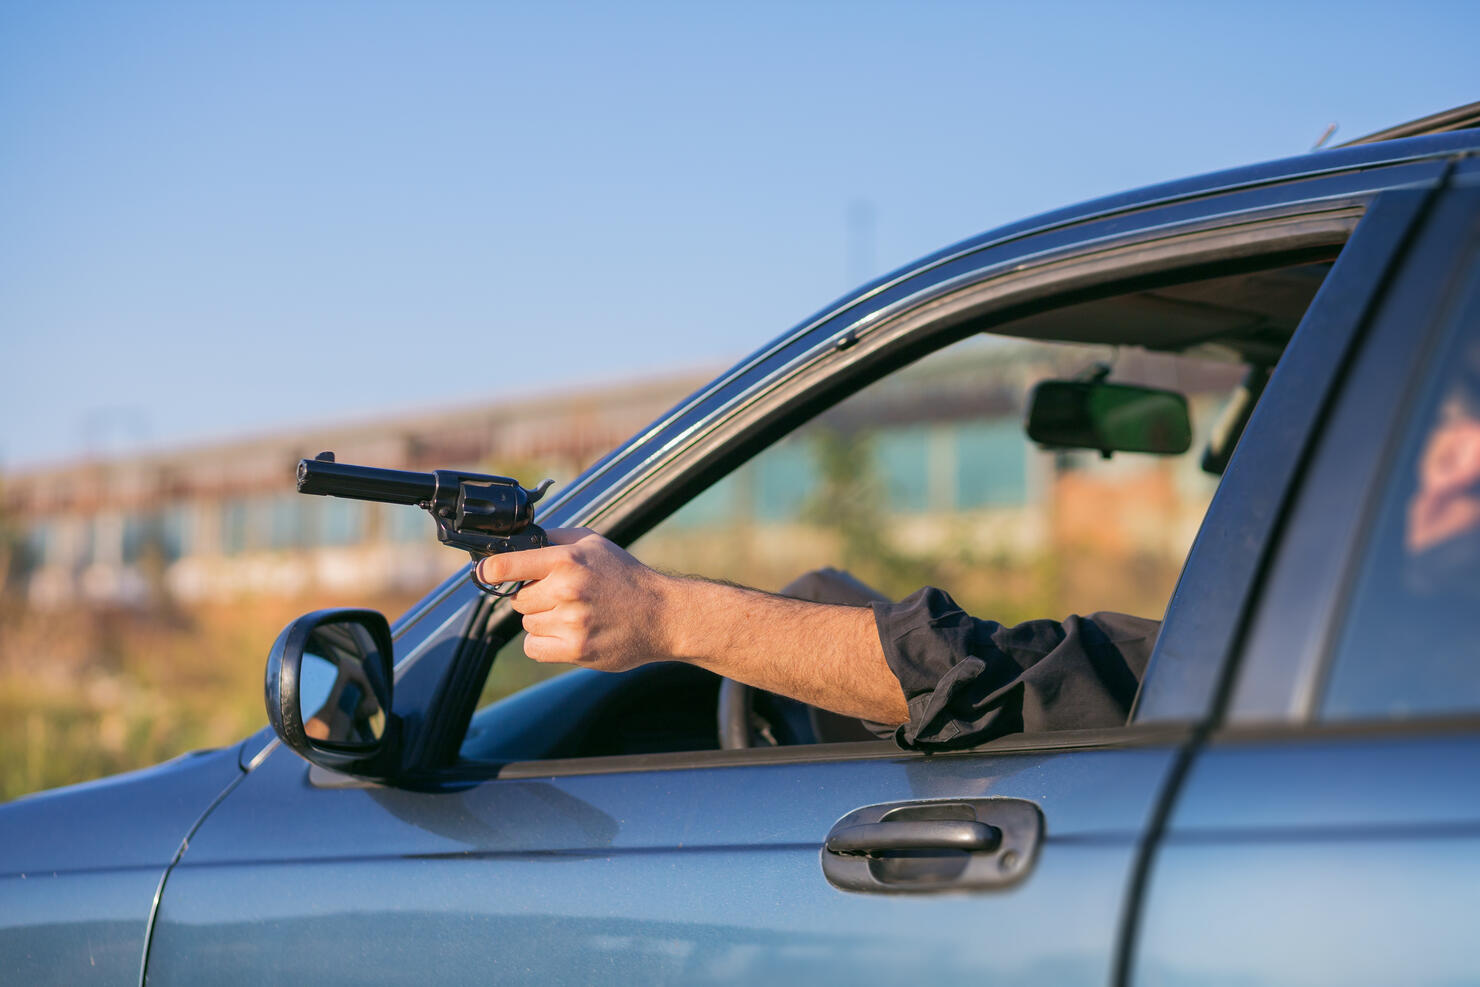 criminal discharging a gun through a window of a moving car